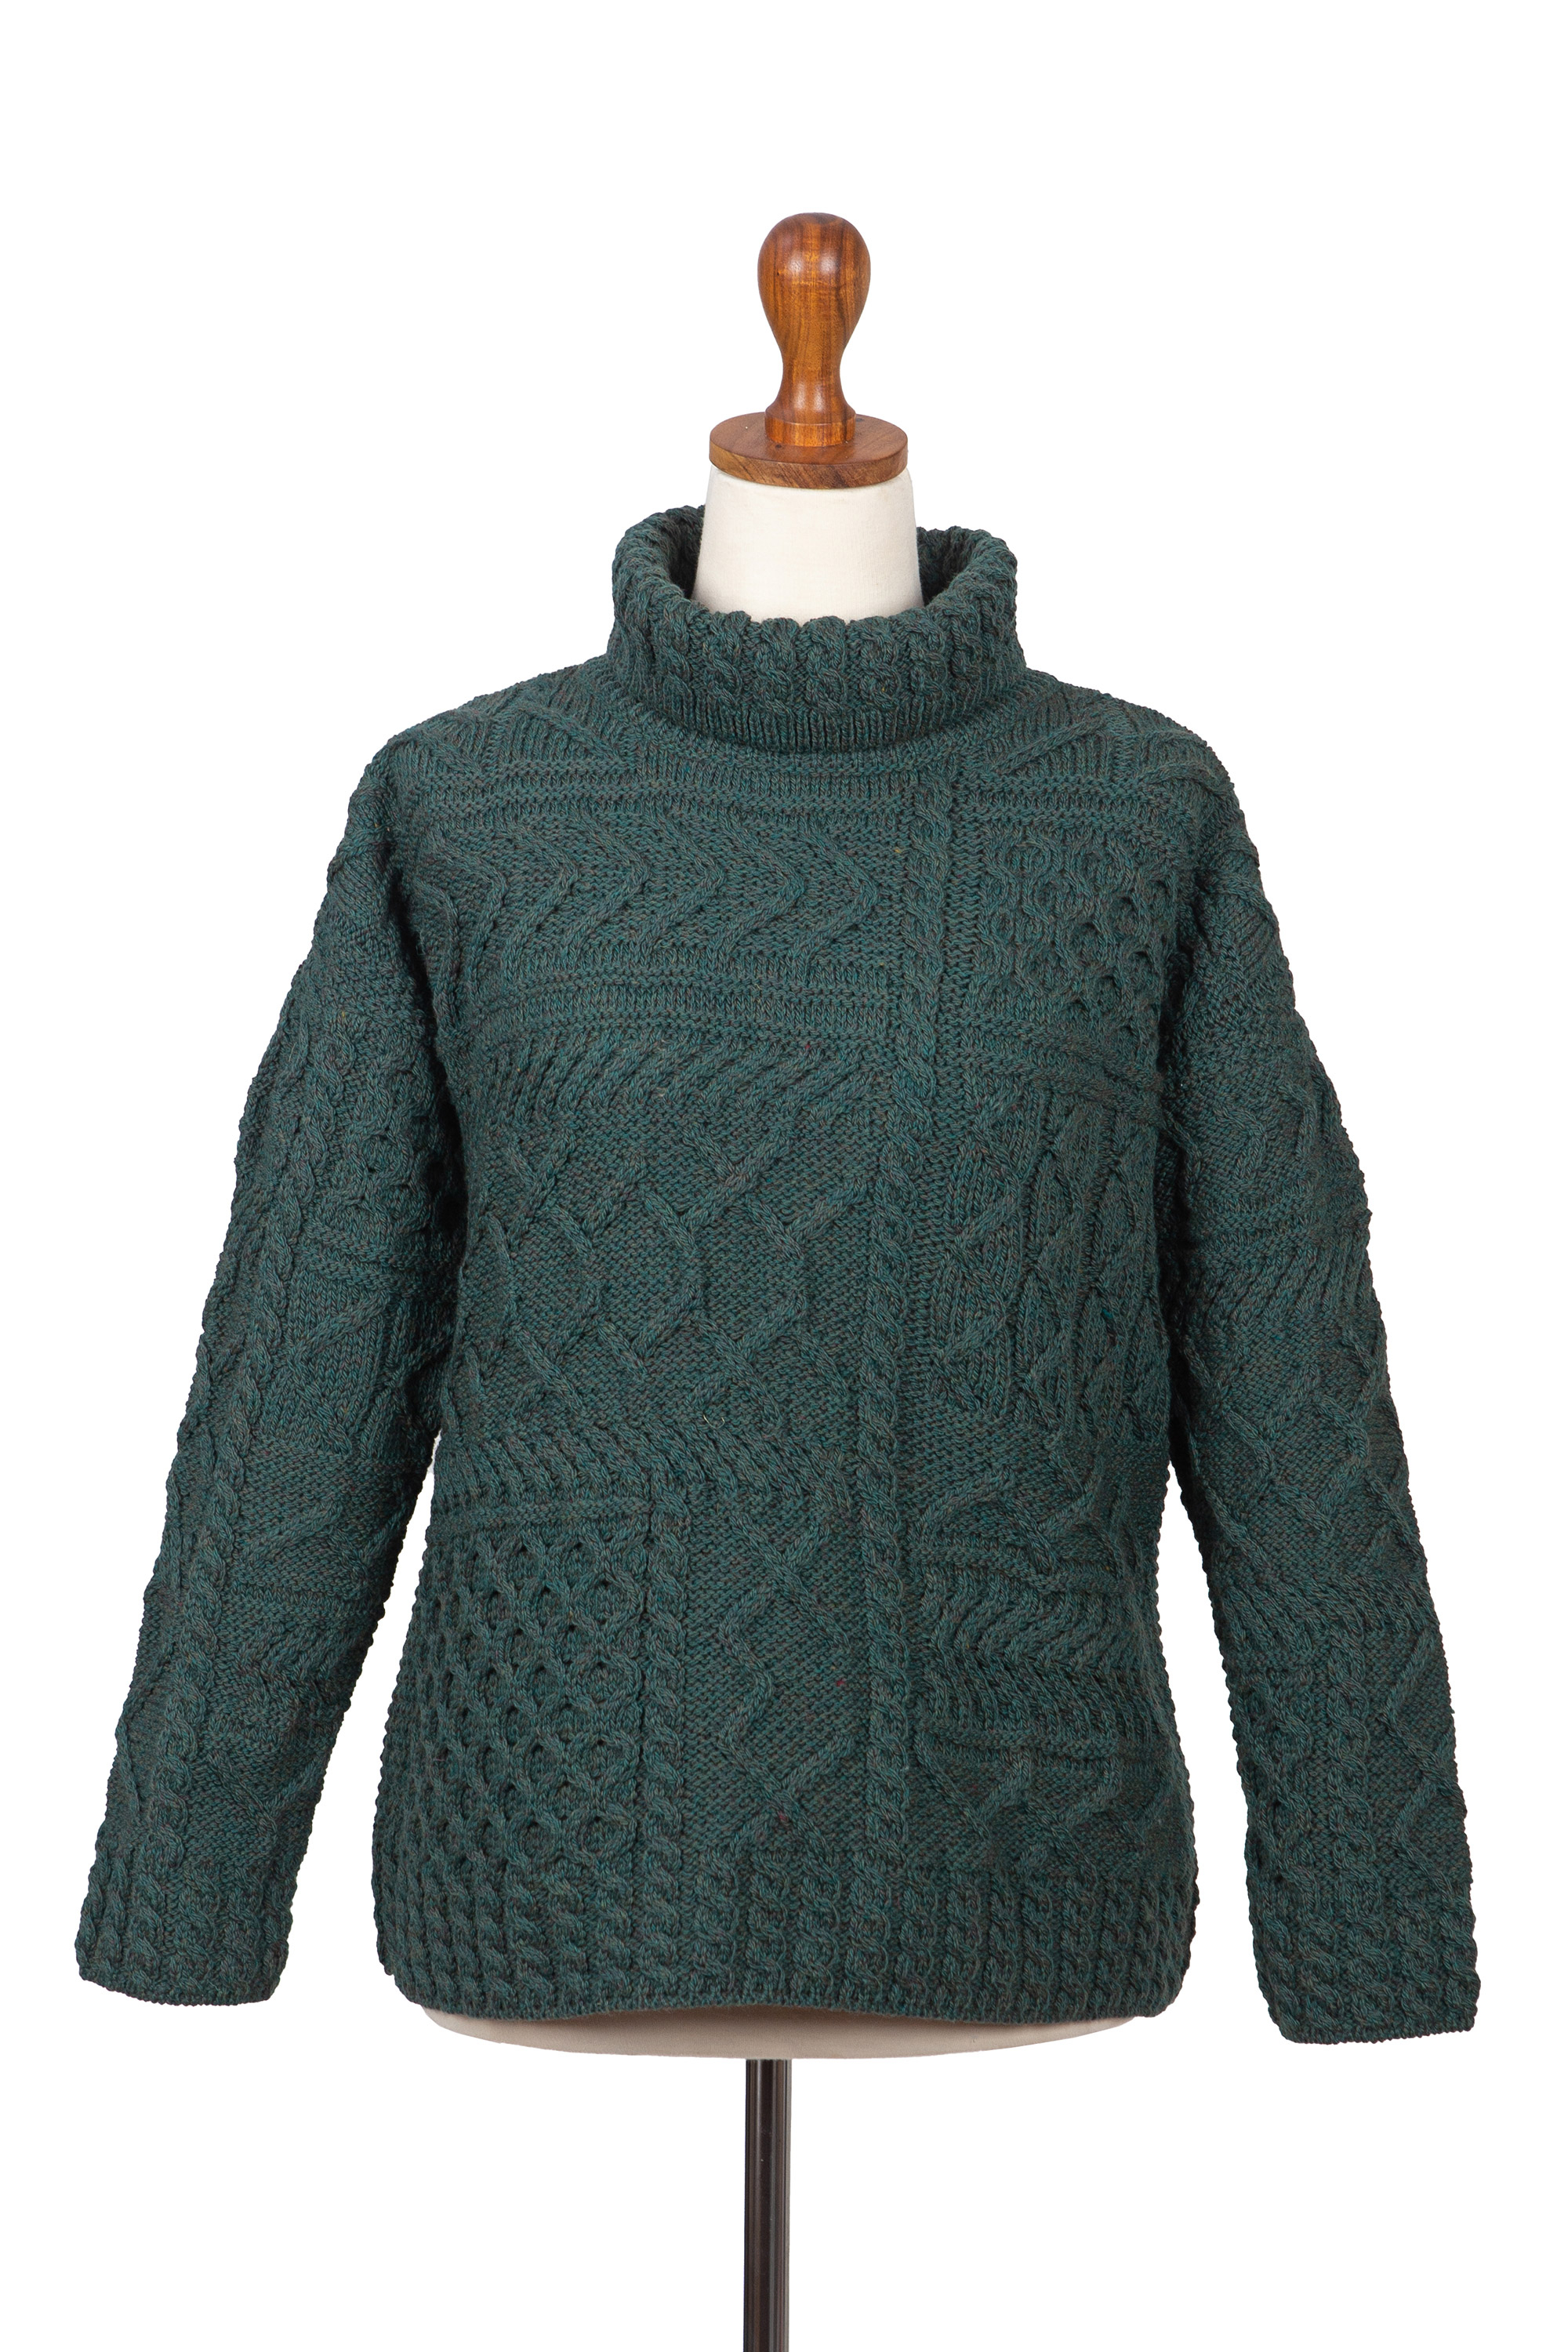 Irish Merino Wool Cowl Neck Sweater - Aran Medley | NOVICA